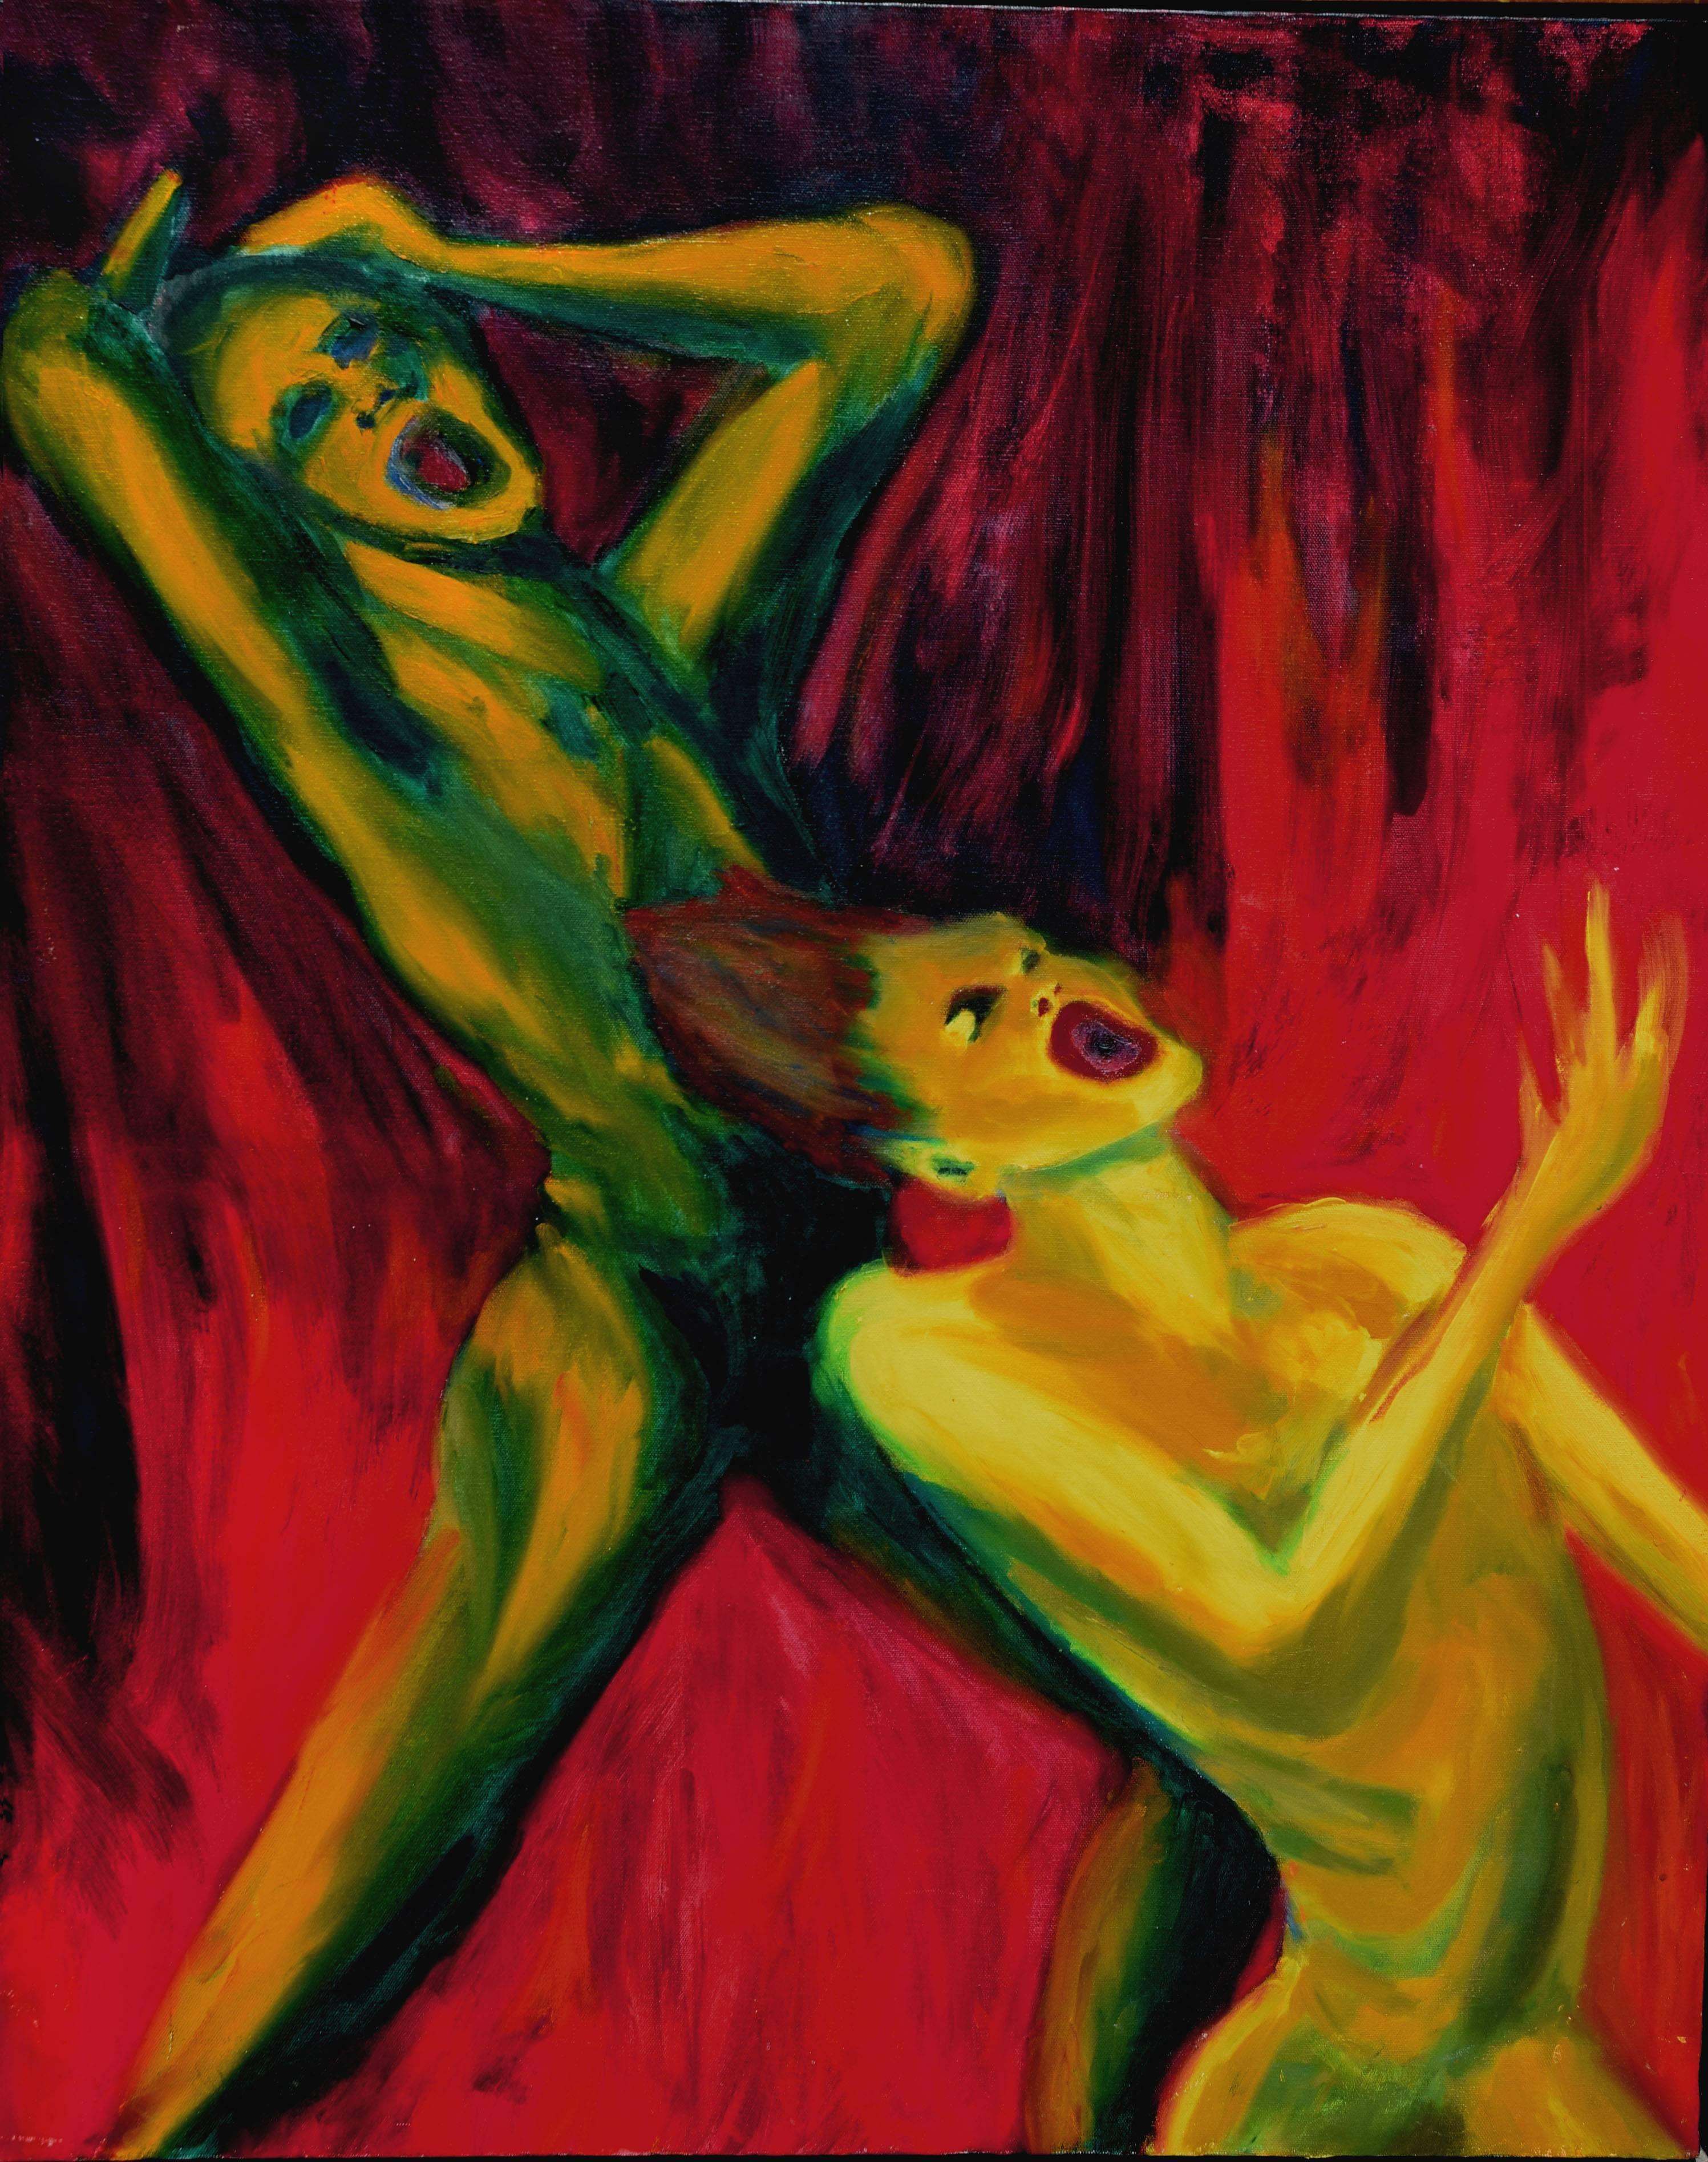  L'enfer de deux - Abstrakte figurative Skulptur  – Painting von J. Gregory